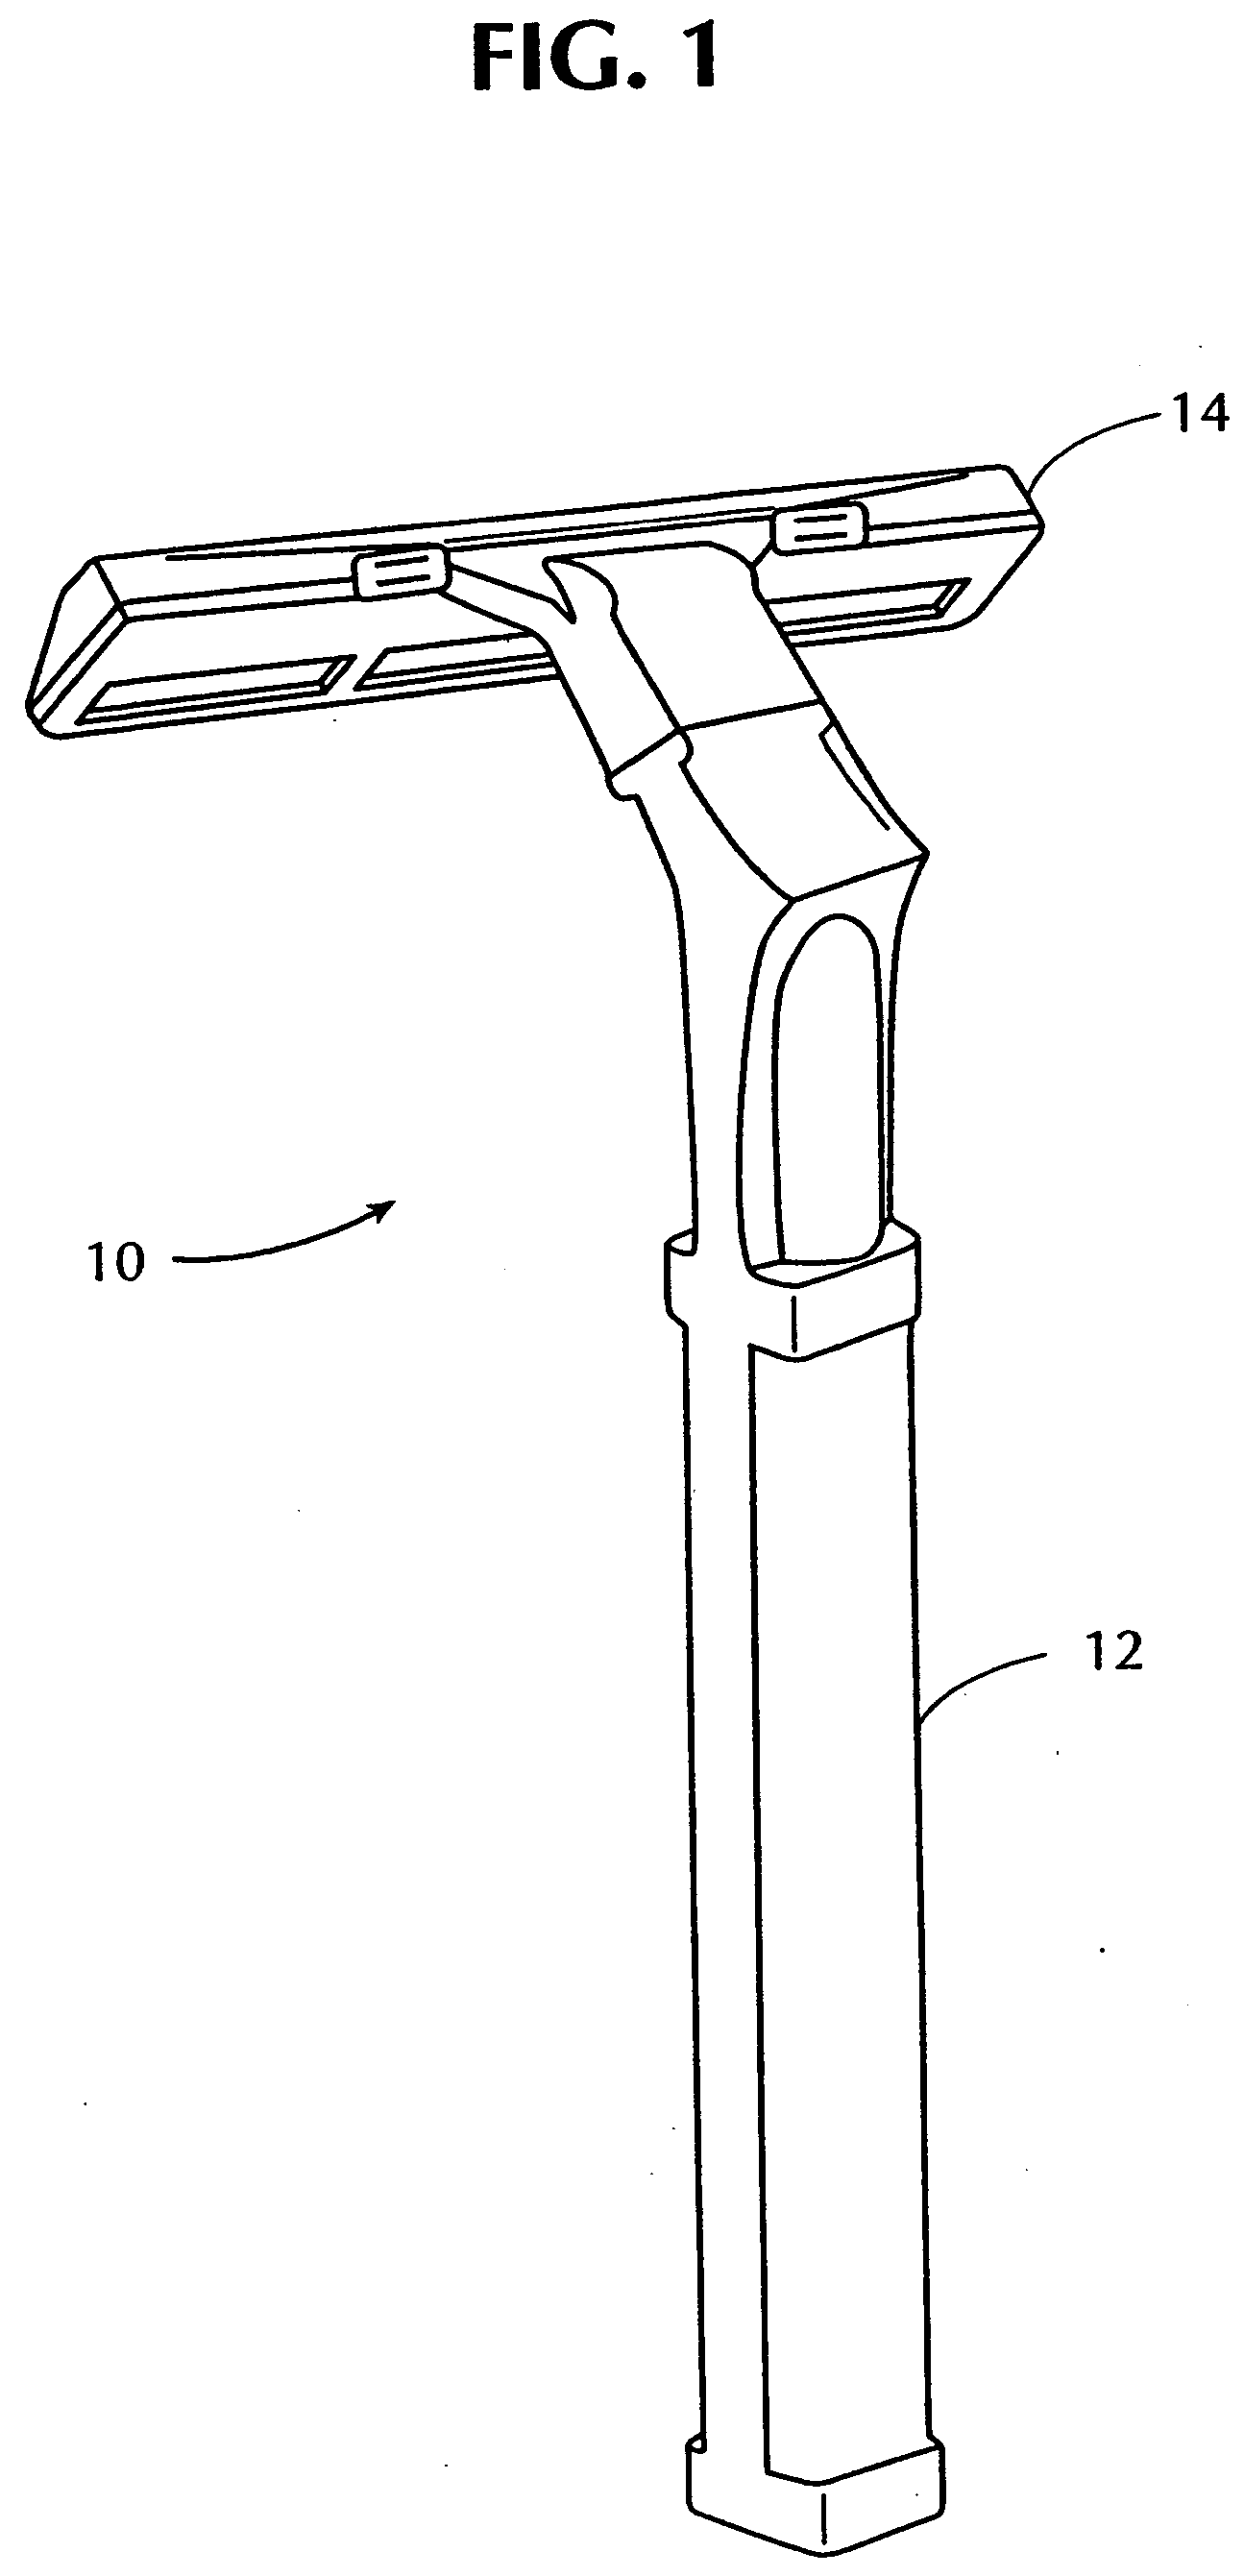 Wet shaving cartridge with four blade edges